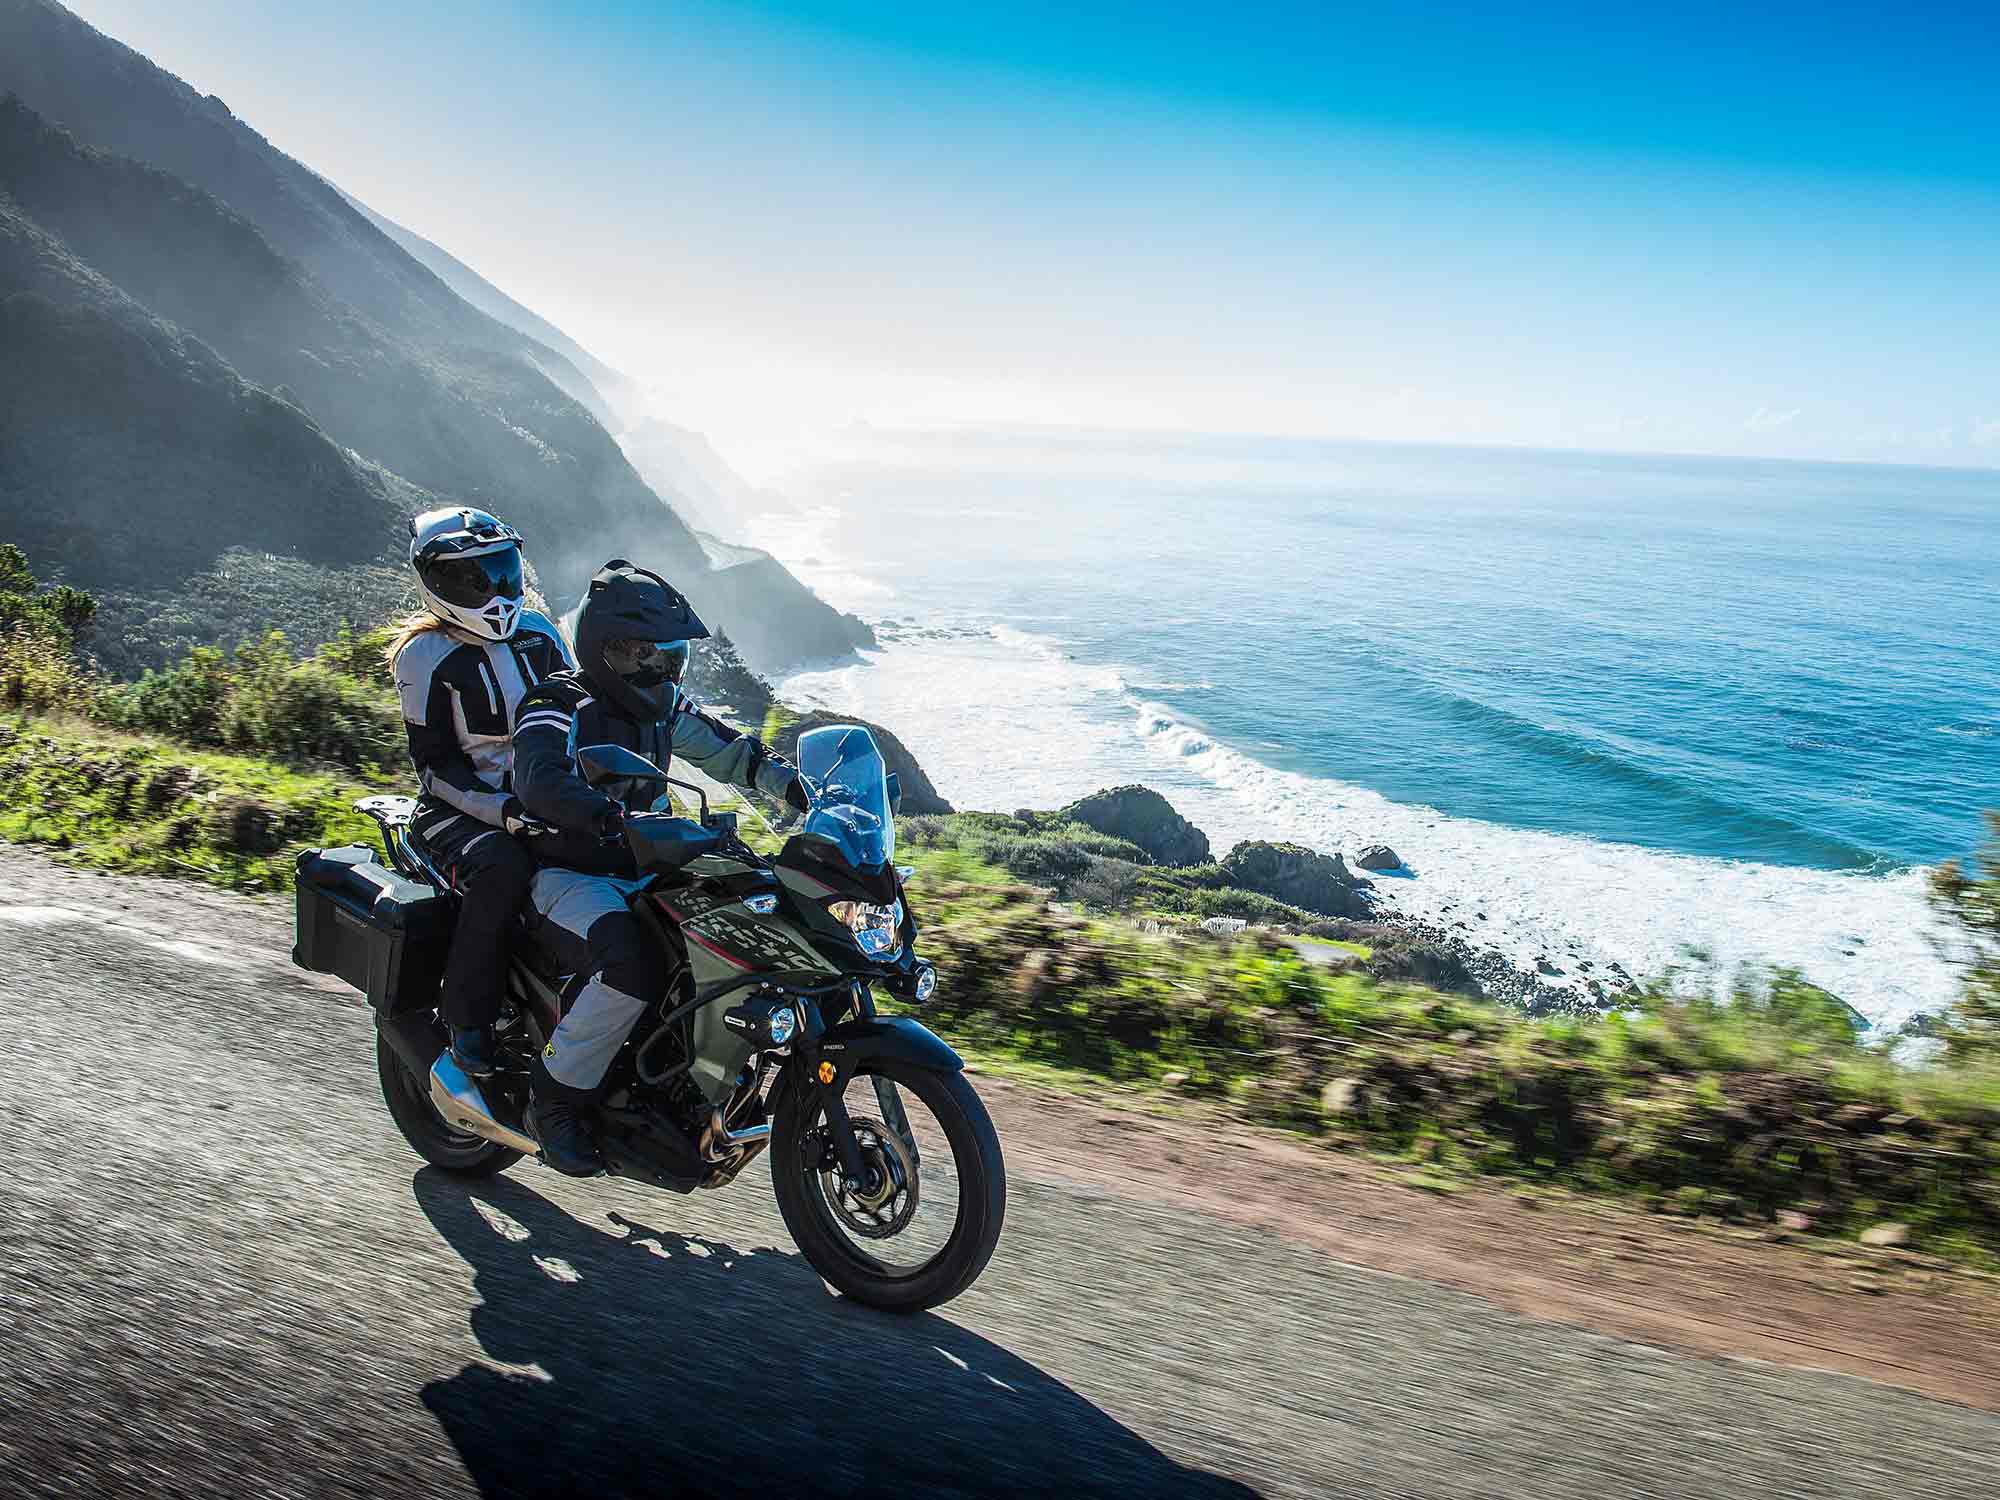 Kawasaki’s small adventure-tourer returns for more two-wheeled trips.